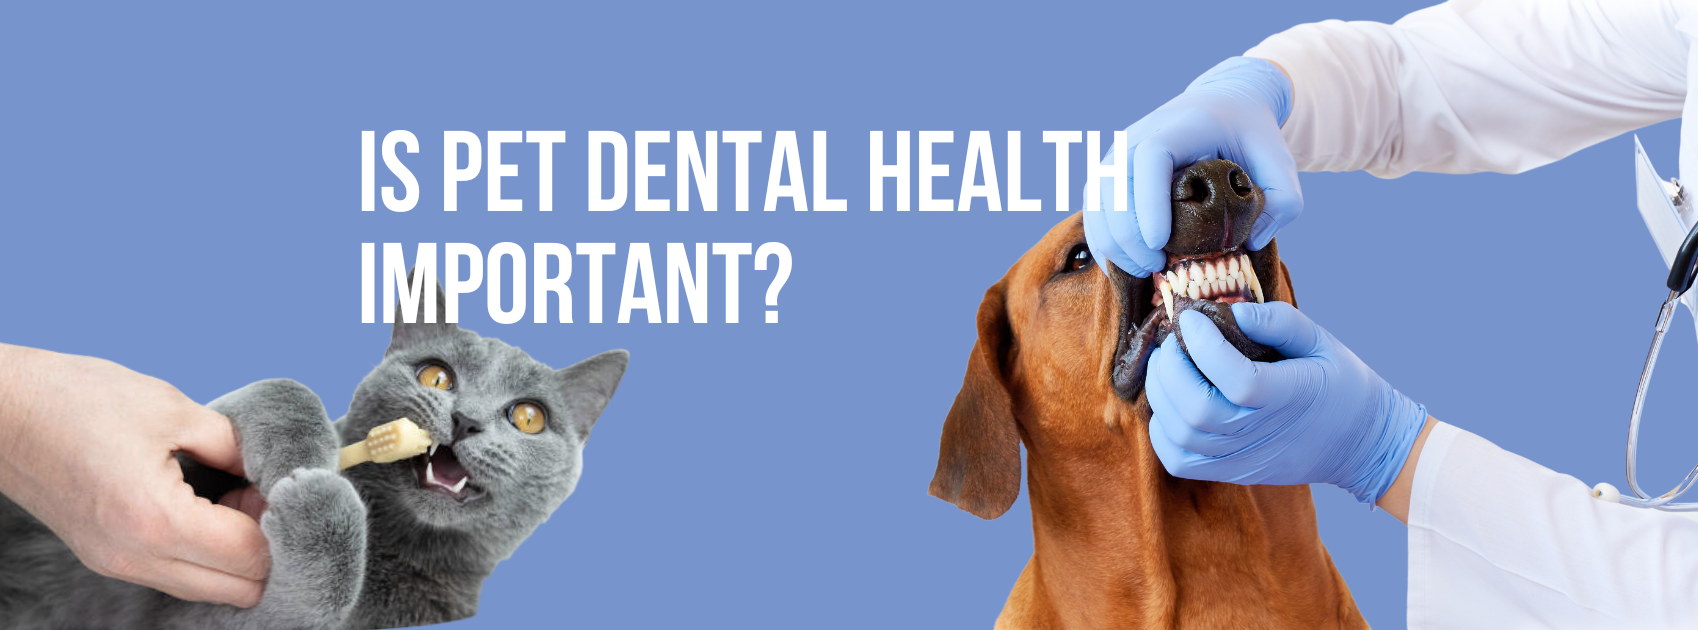 Is Pet Dental Health Important?